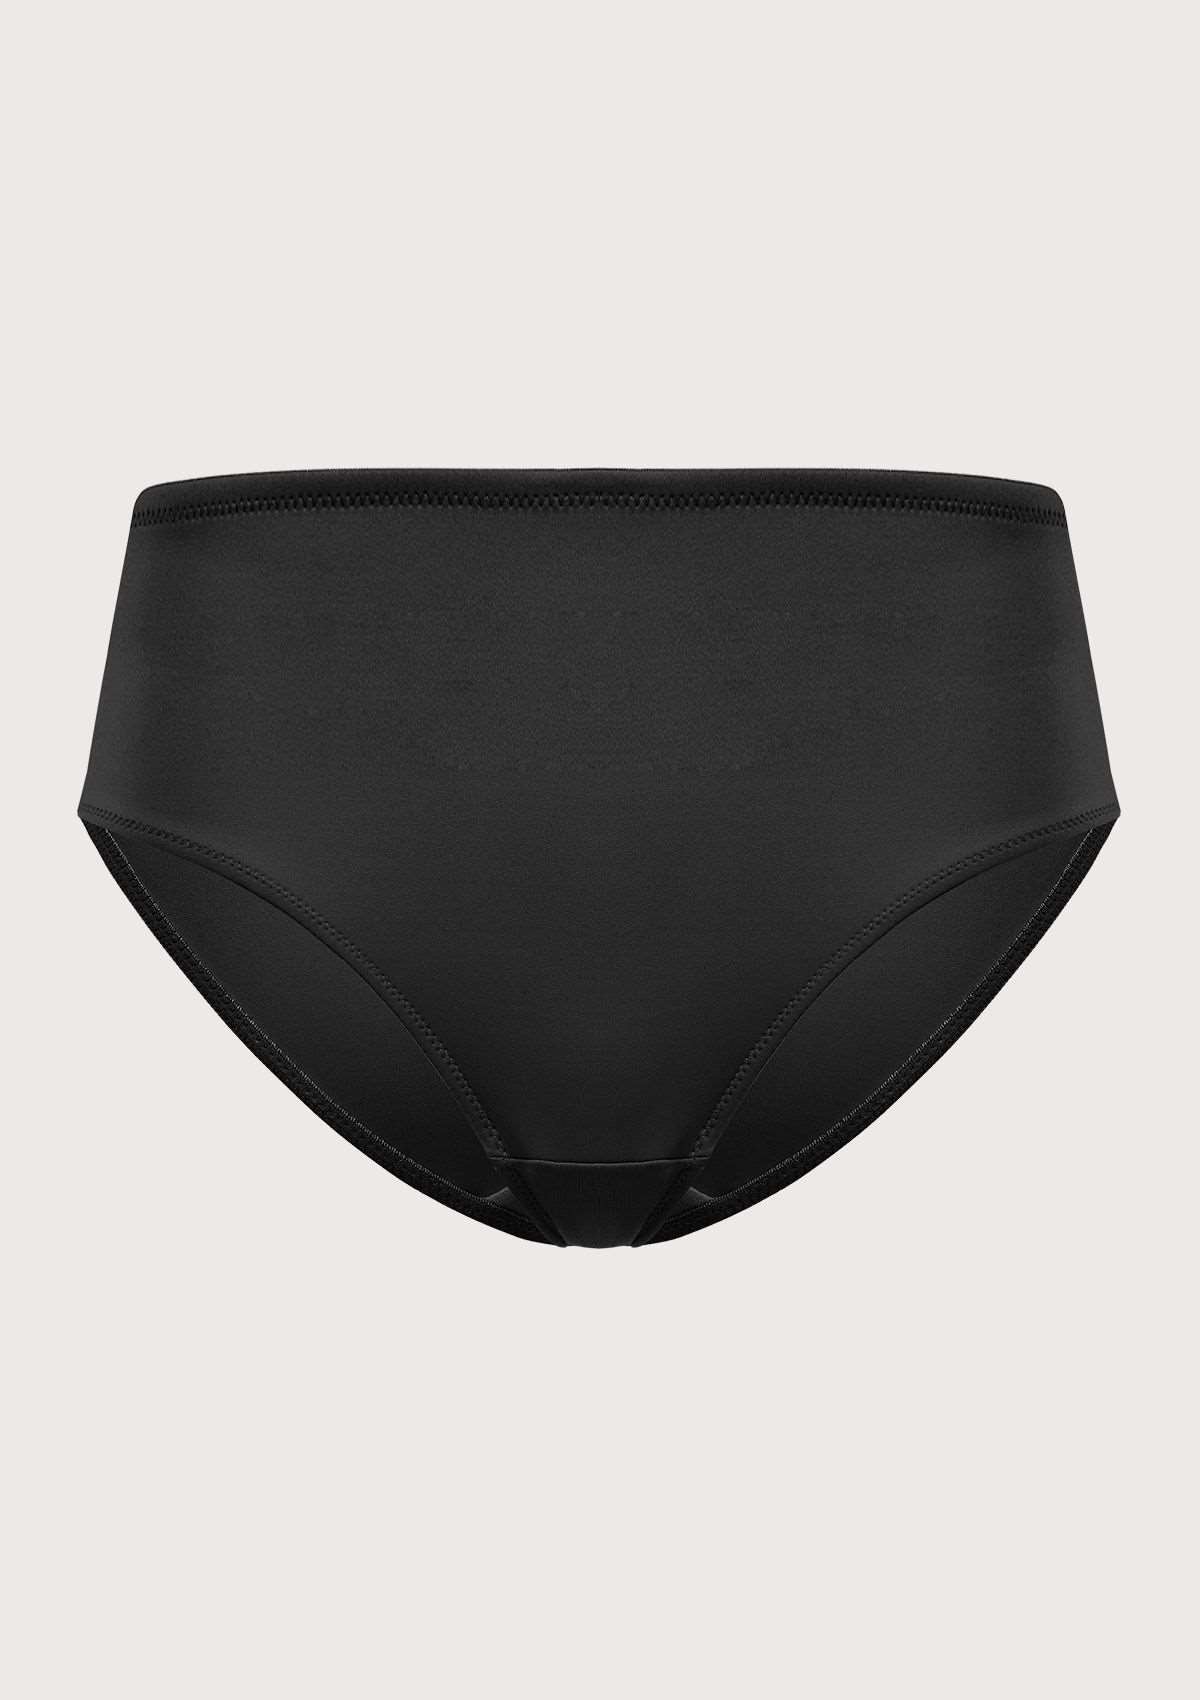 HSIA Patricia Smooth Soft Stretch Comfort High-Rise Brief Underwear - M / Beige